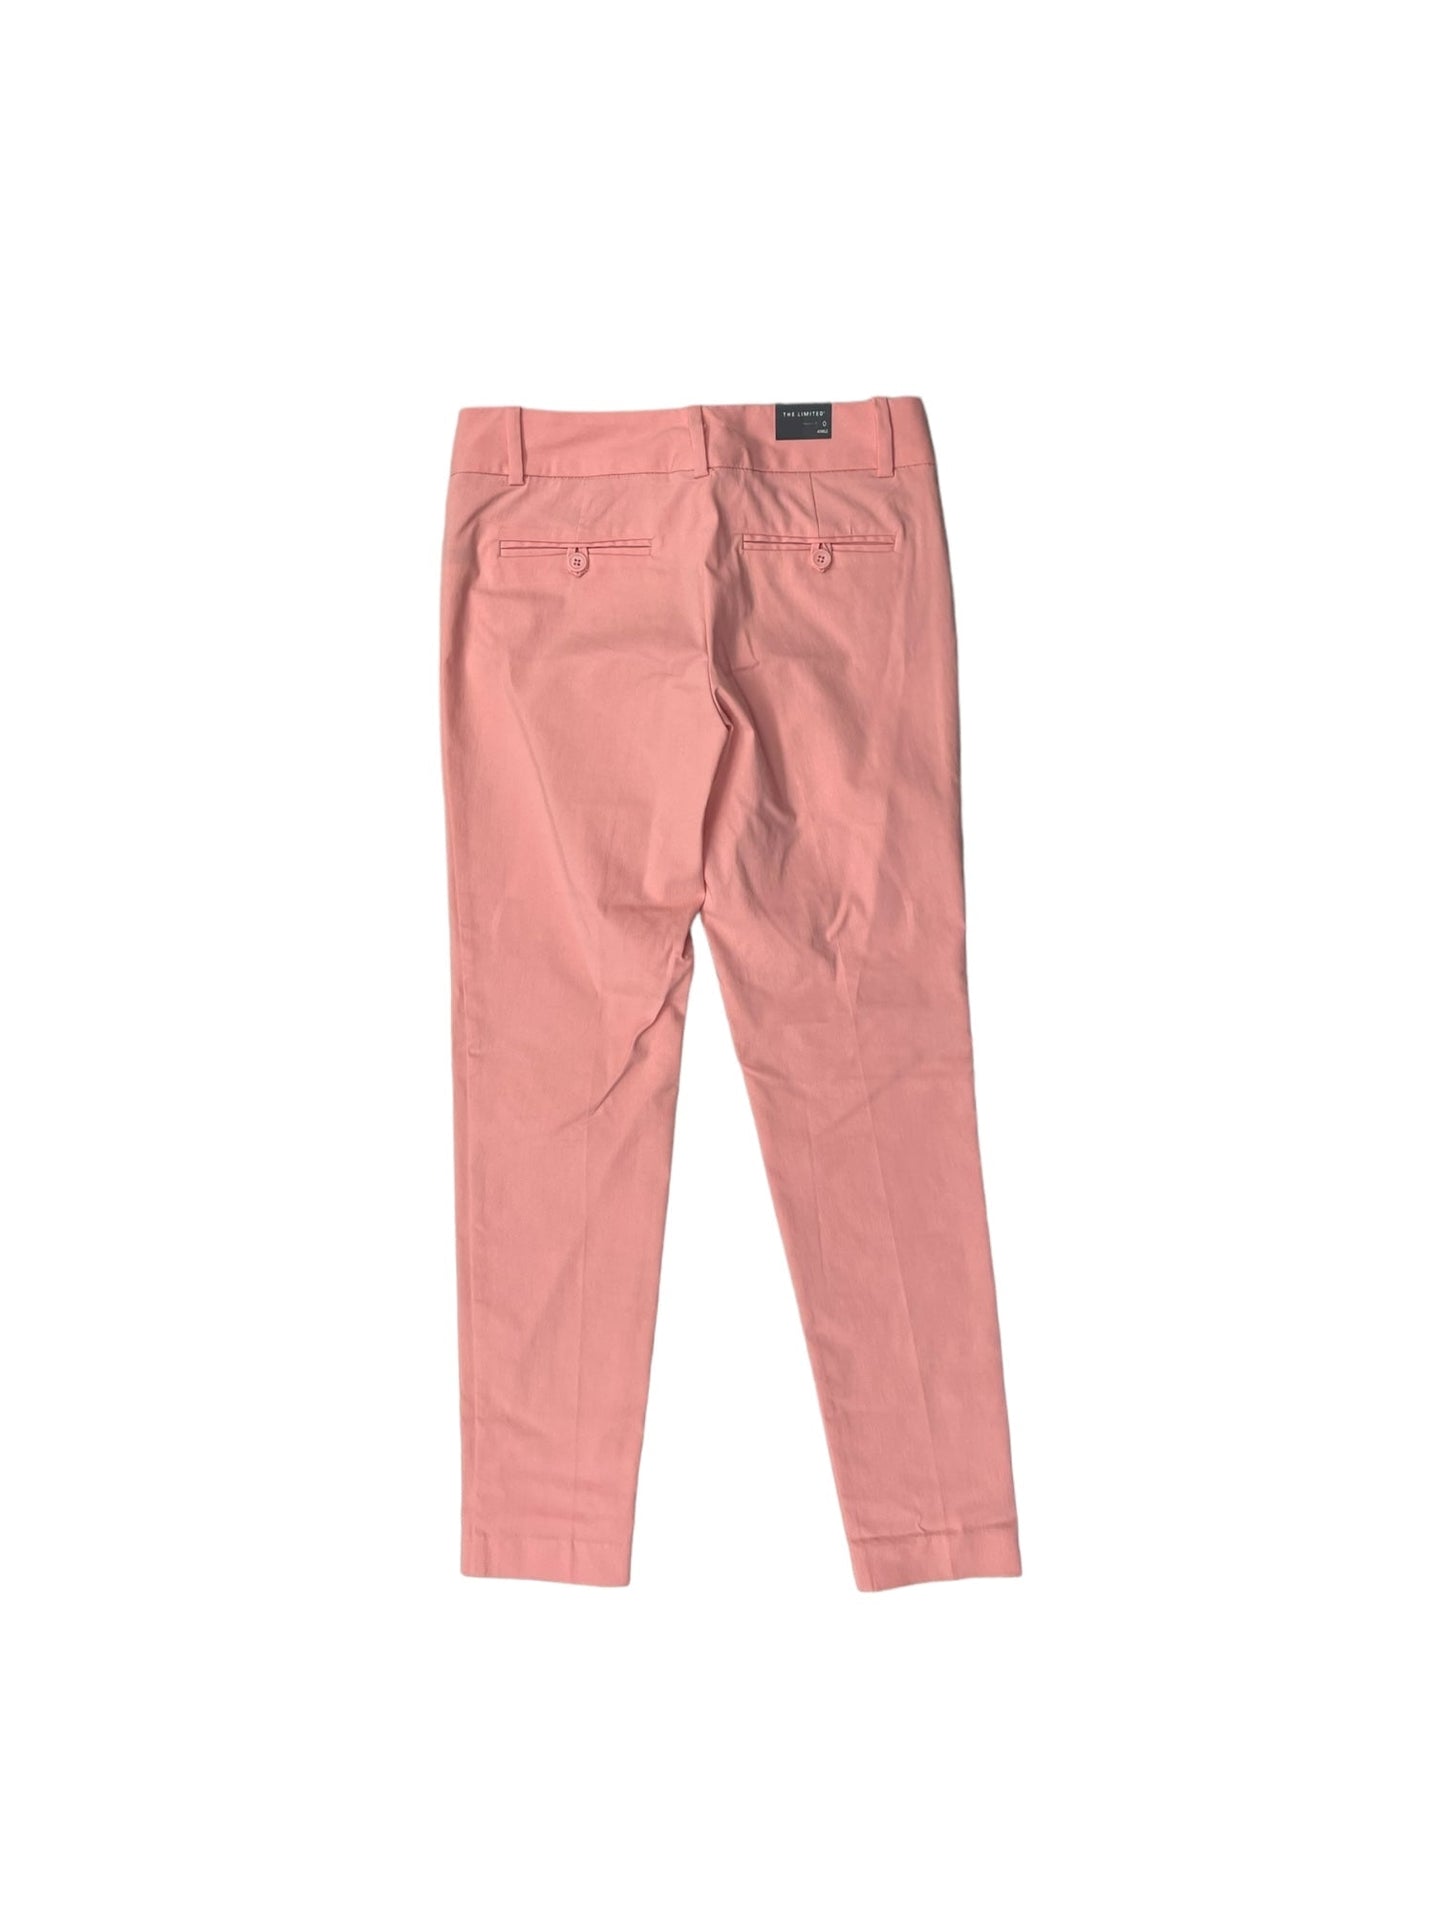 Pink Pants Dress Limited, Size 0